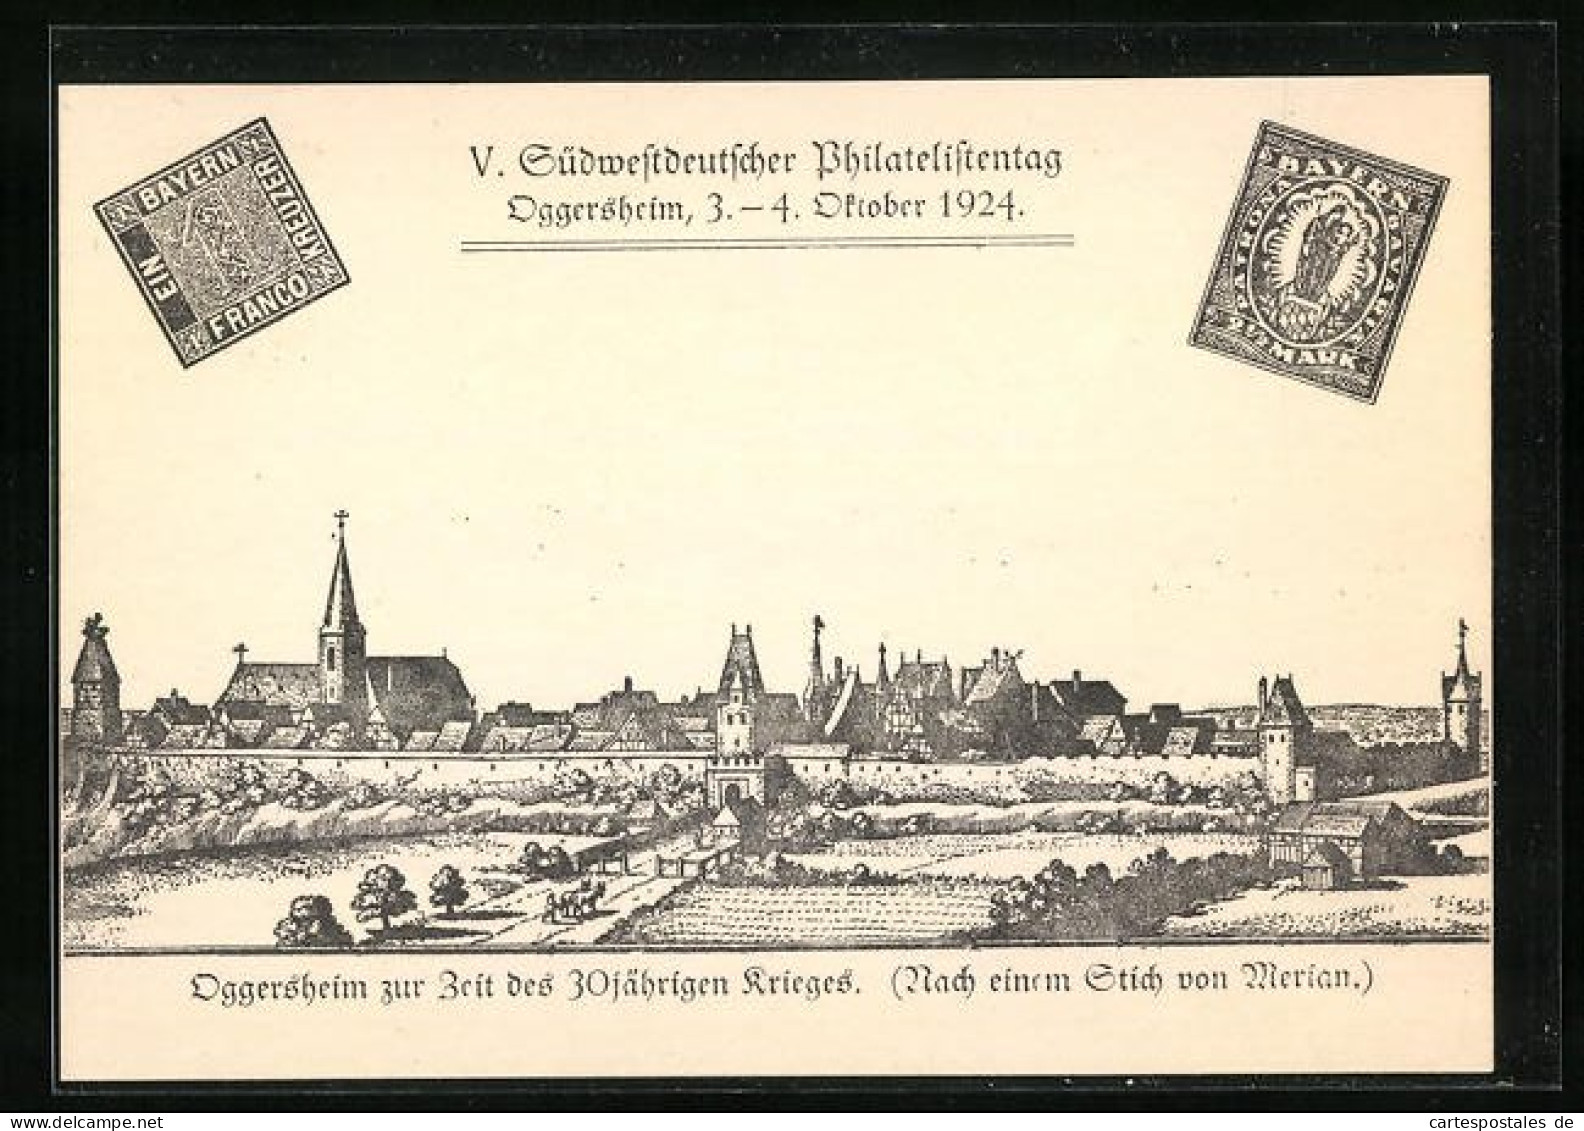 Künstler-AK Oggersheim, V. Südwestdeutscher Philatelistentag 1924, Teilansicht, PP 88 C 7 /01, Ganzsache  - Timbres (représentations)